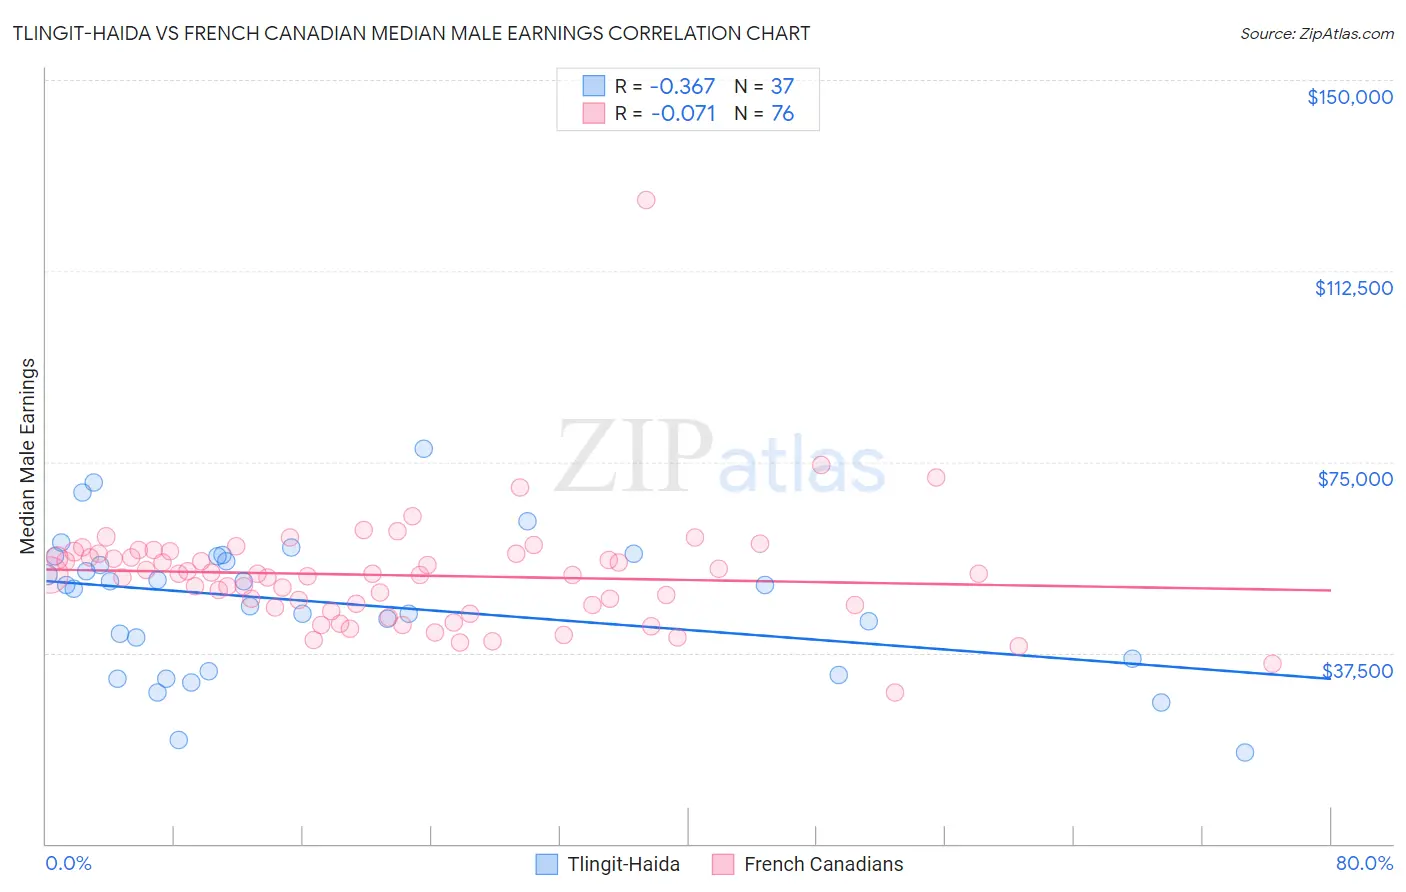 Tlingit-Haida vs French Canadian Median Male Earnings